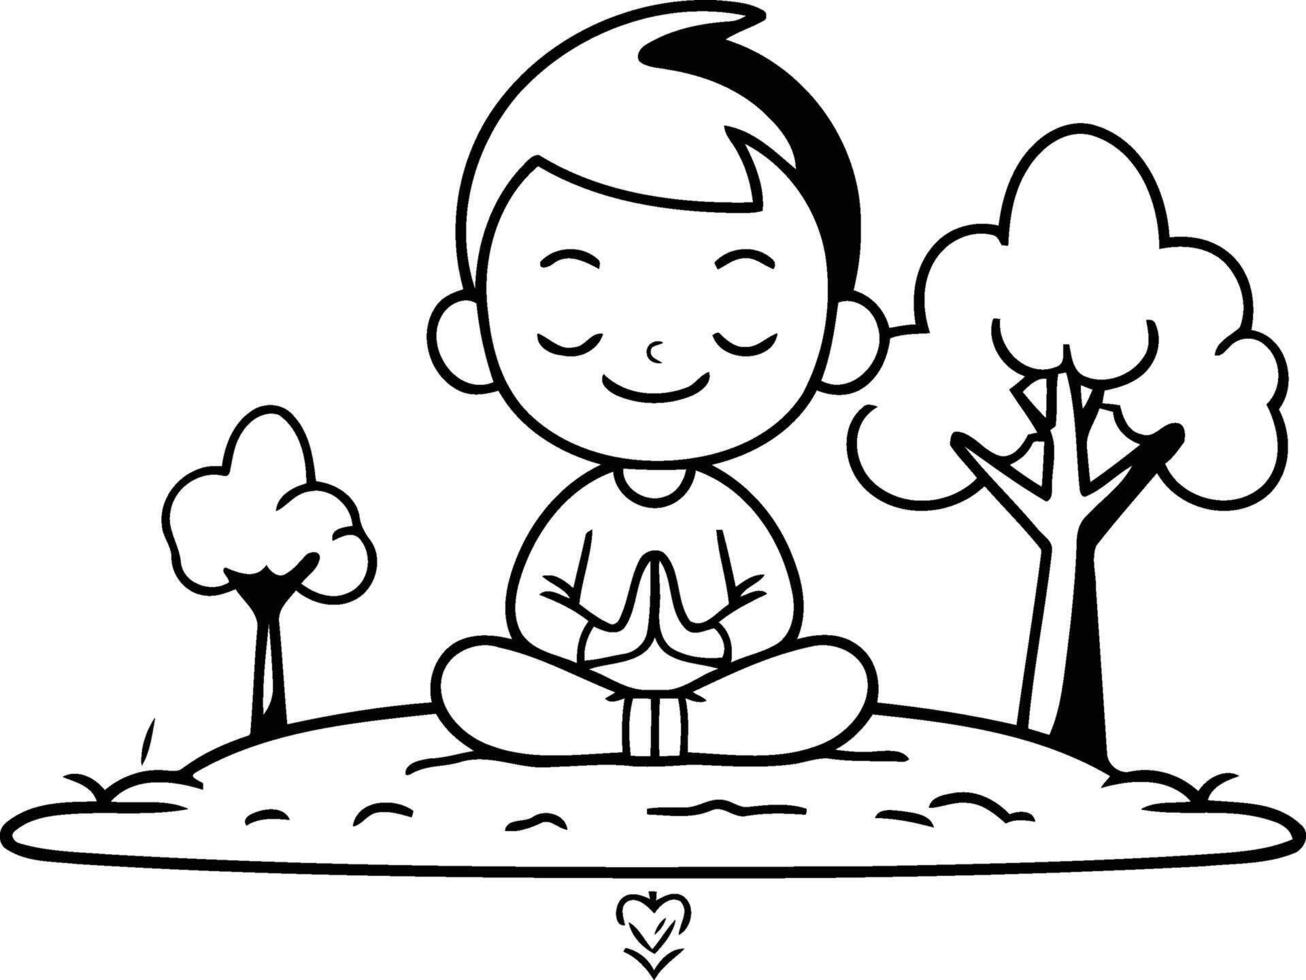 Cute little boy meditating in the park. Cartoon illustration. vector